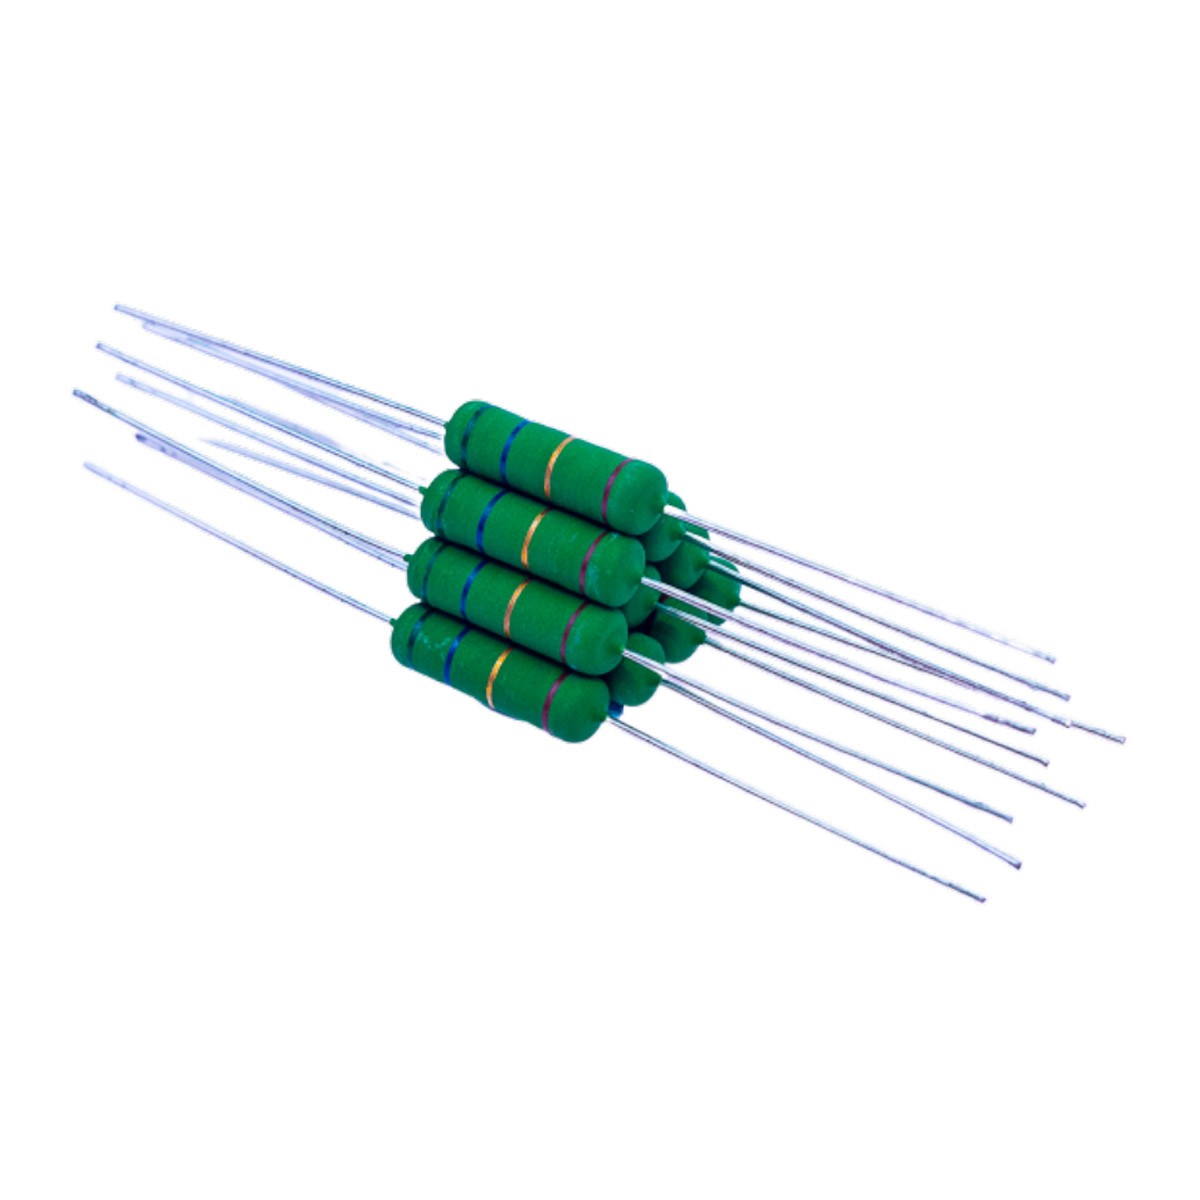 1x SA-50 650R 1% 5W GAL-R Wirewound Resistors 650 ohms